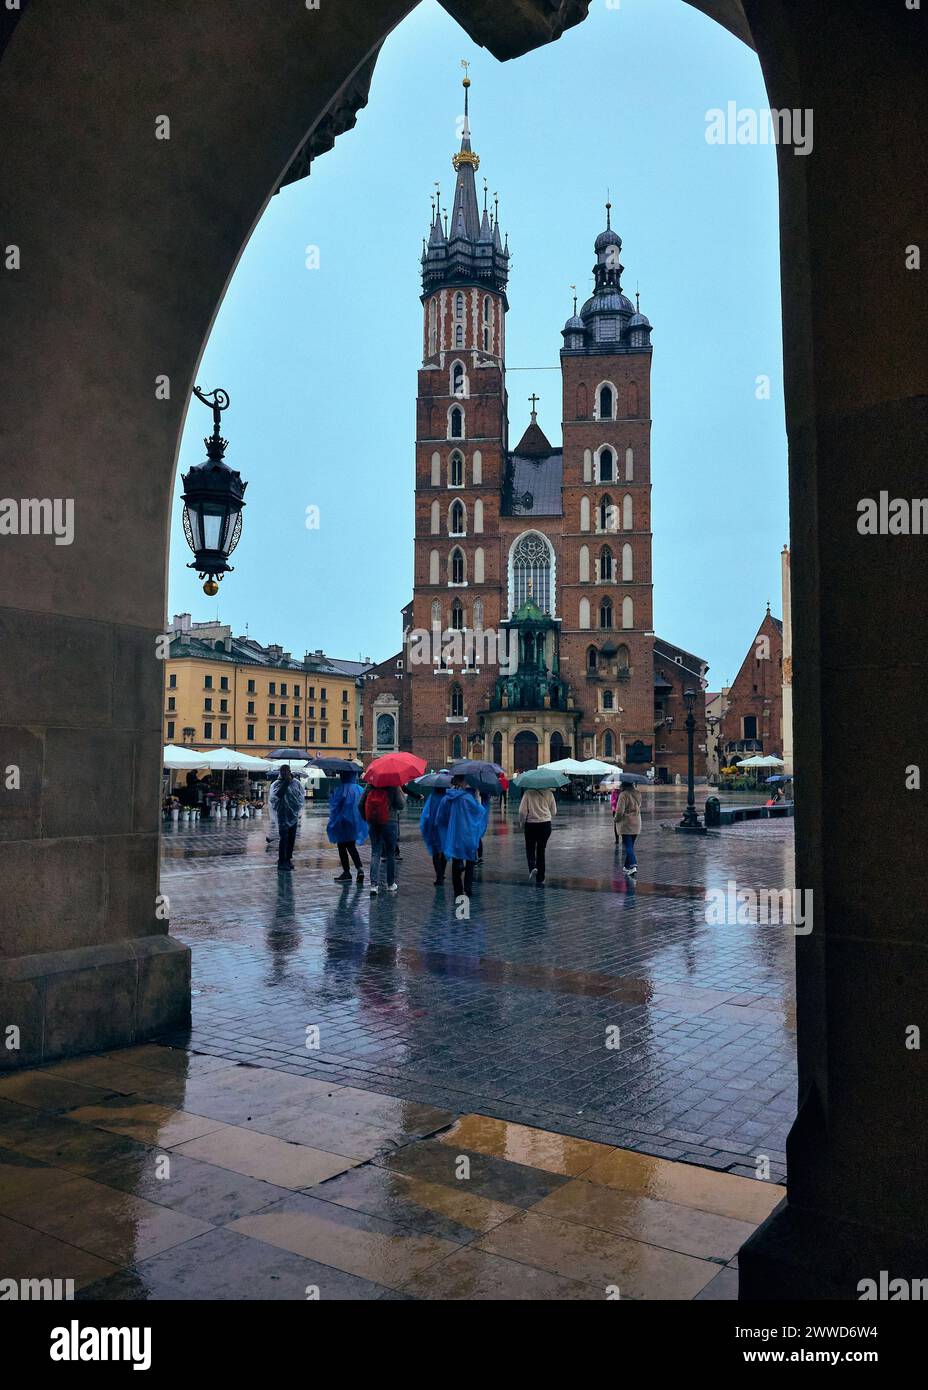 Basilica of St. Mary's on the Market Square on a rainy day. Krakow, Poland. Stock Photo